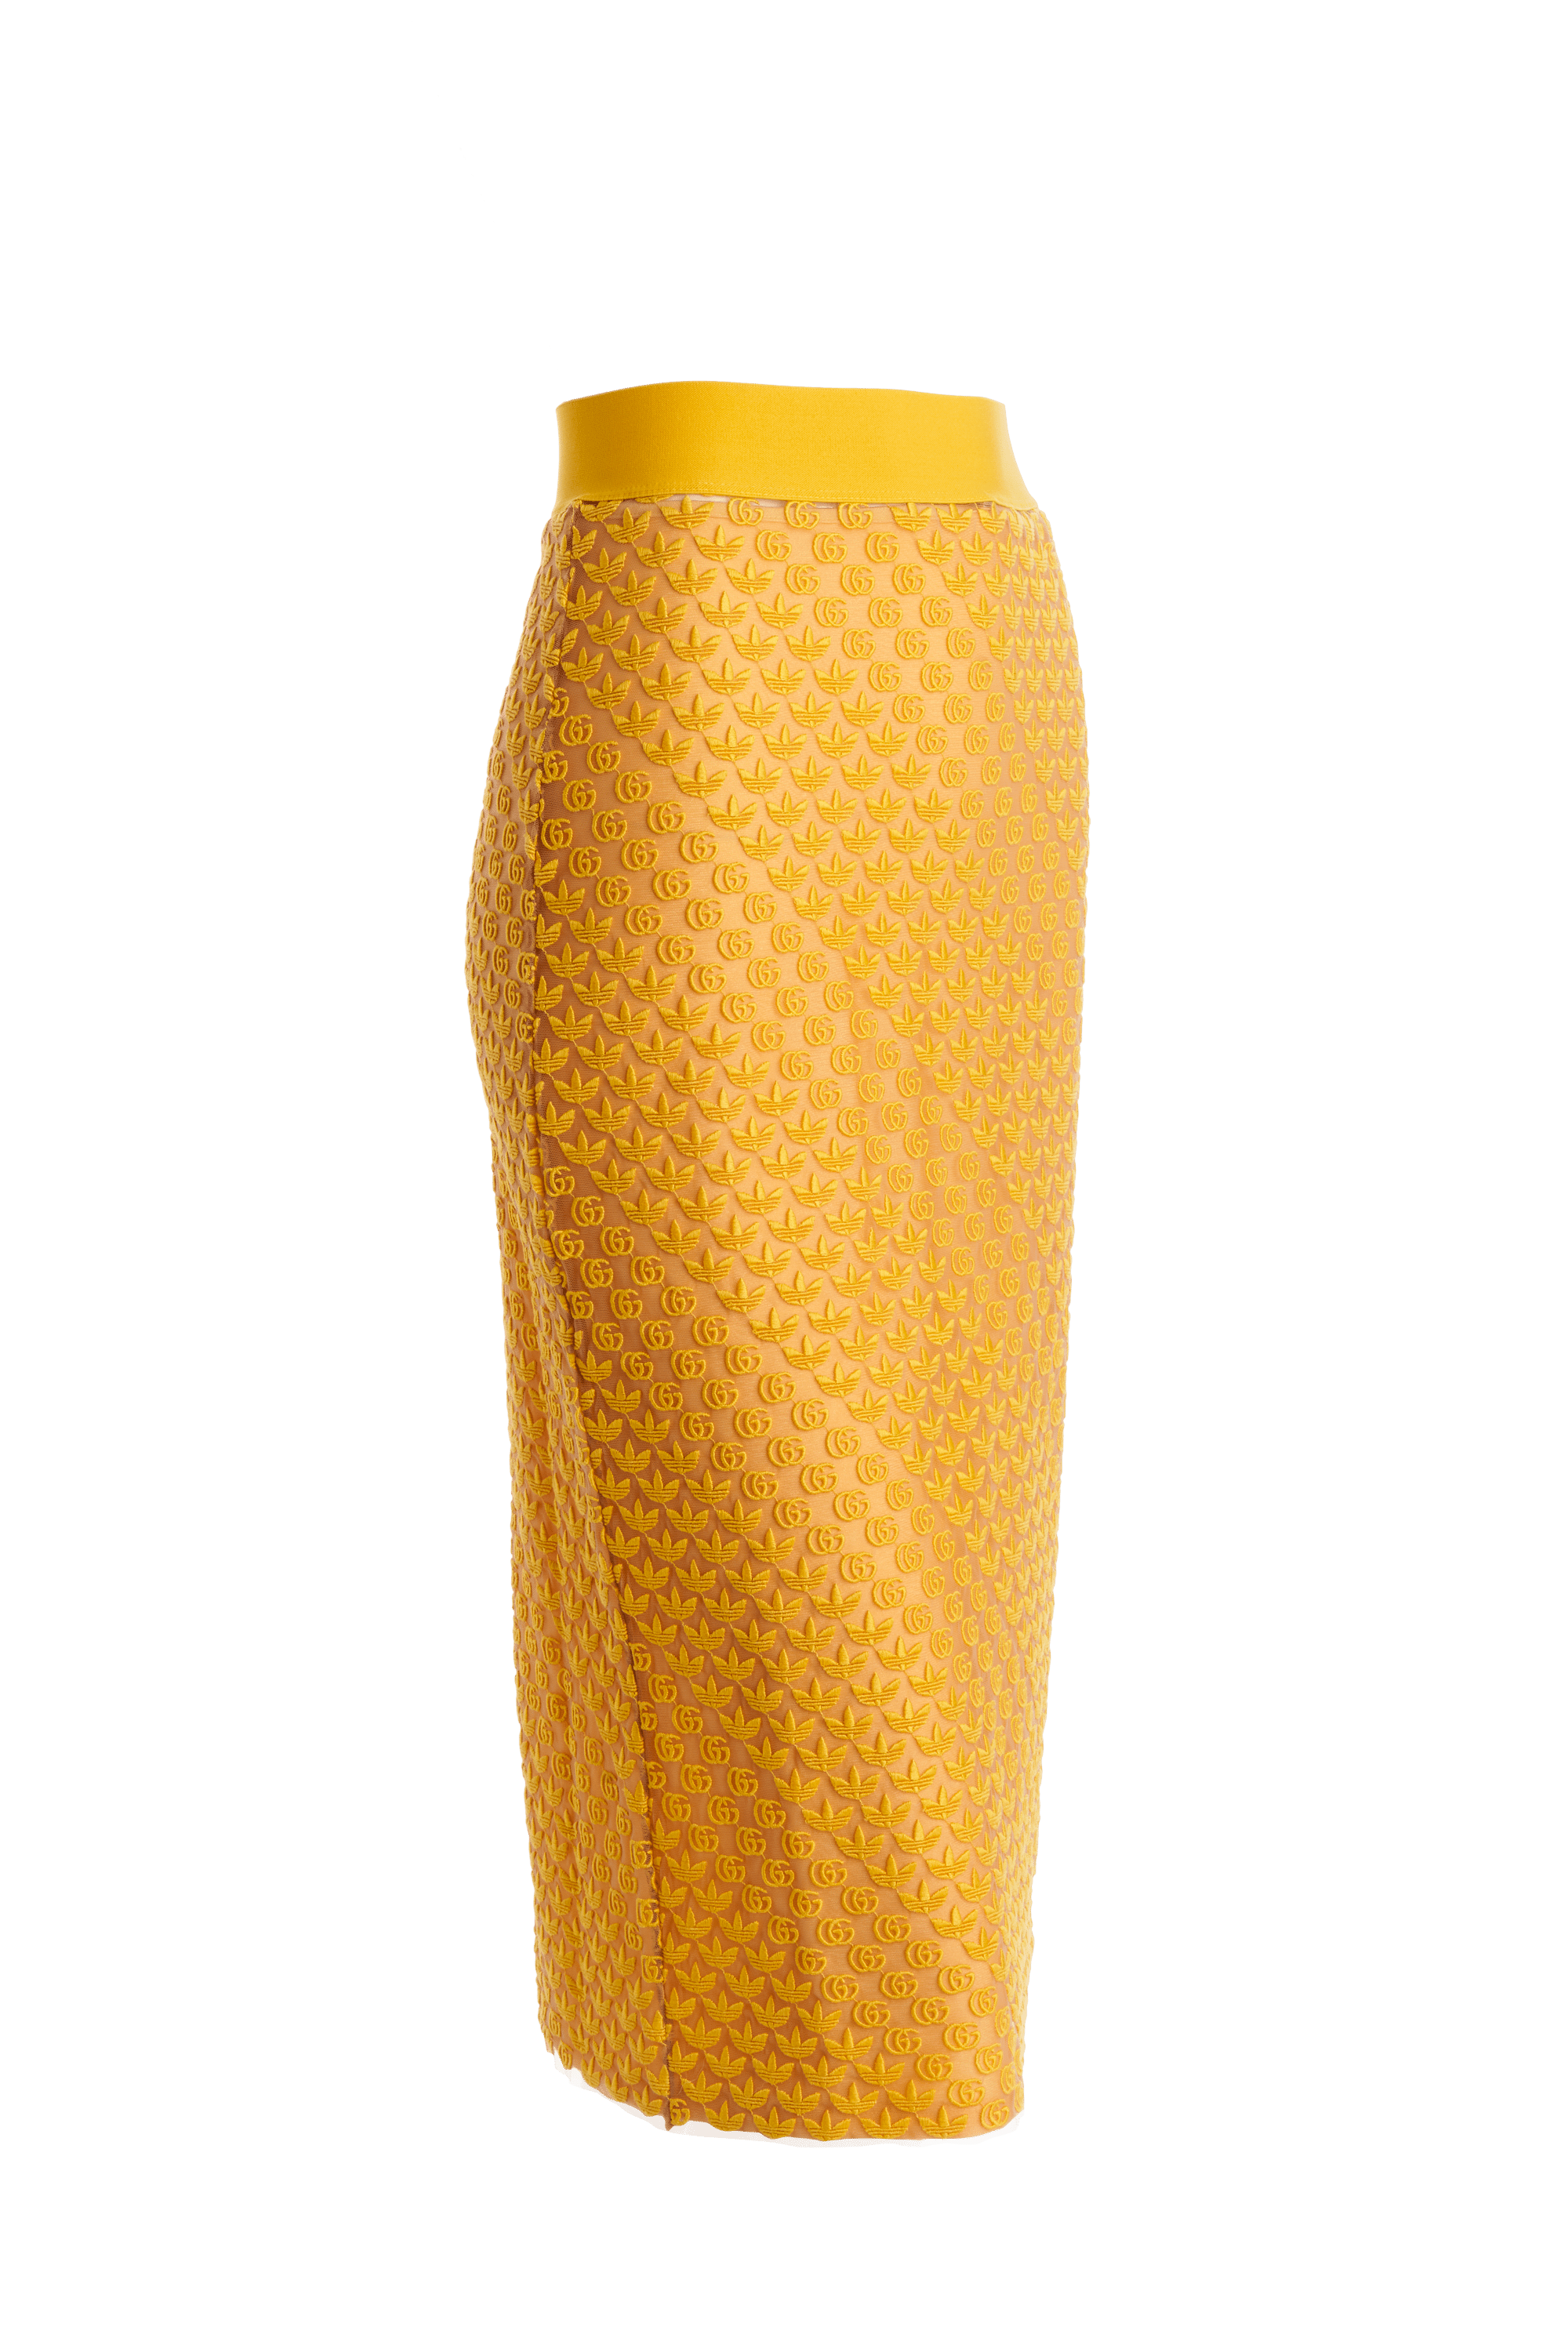 Gucci x Adidas Yellow Sport Skirt - Foxy Couture Carmel